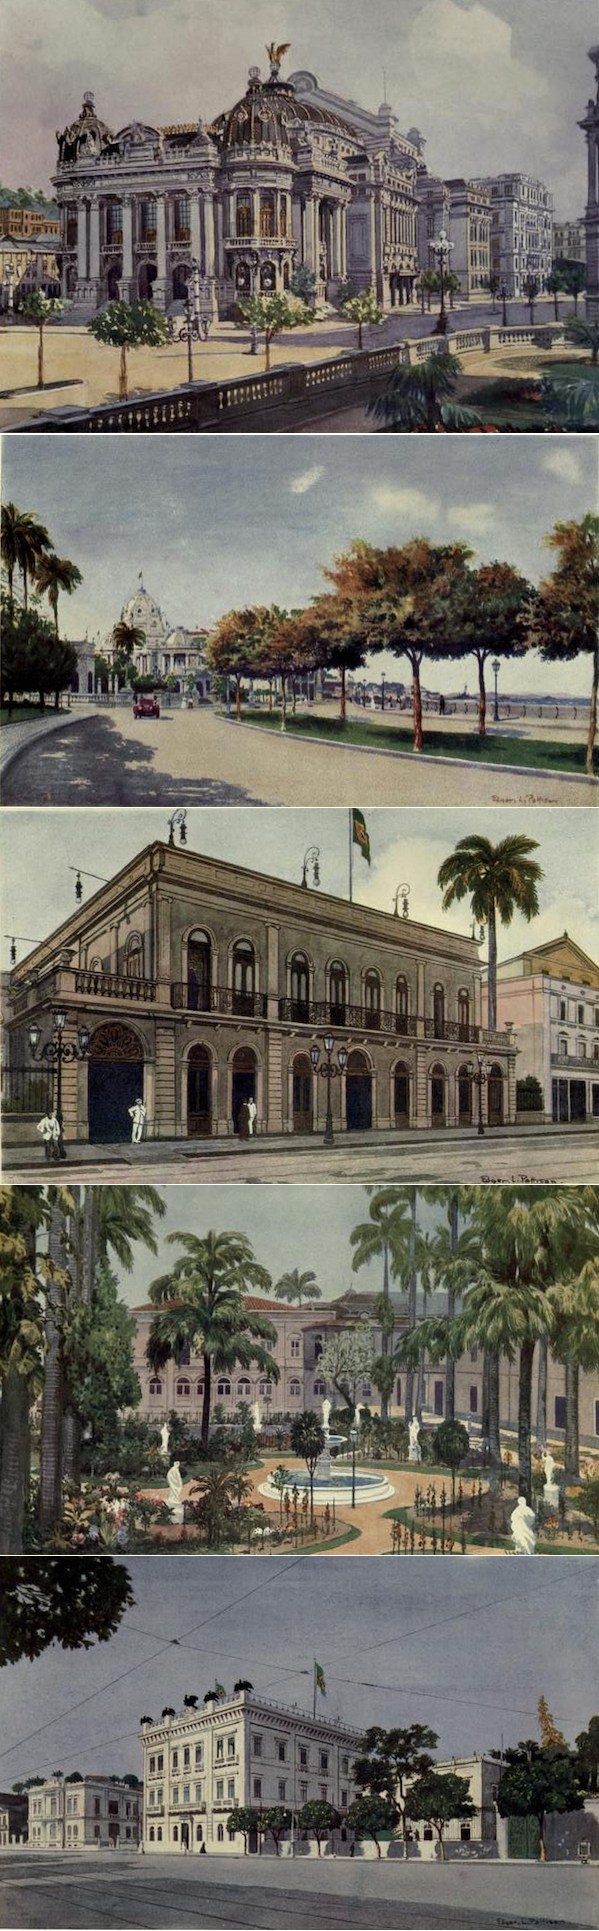 teatro-municipal-do-rio-de-janeiro-itamaraty-palacio-monroe-e-palacio-do-catete